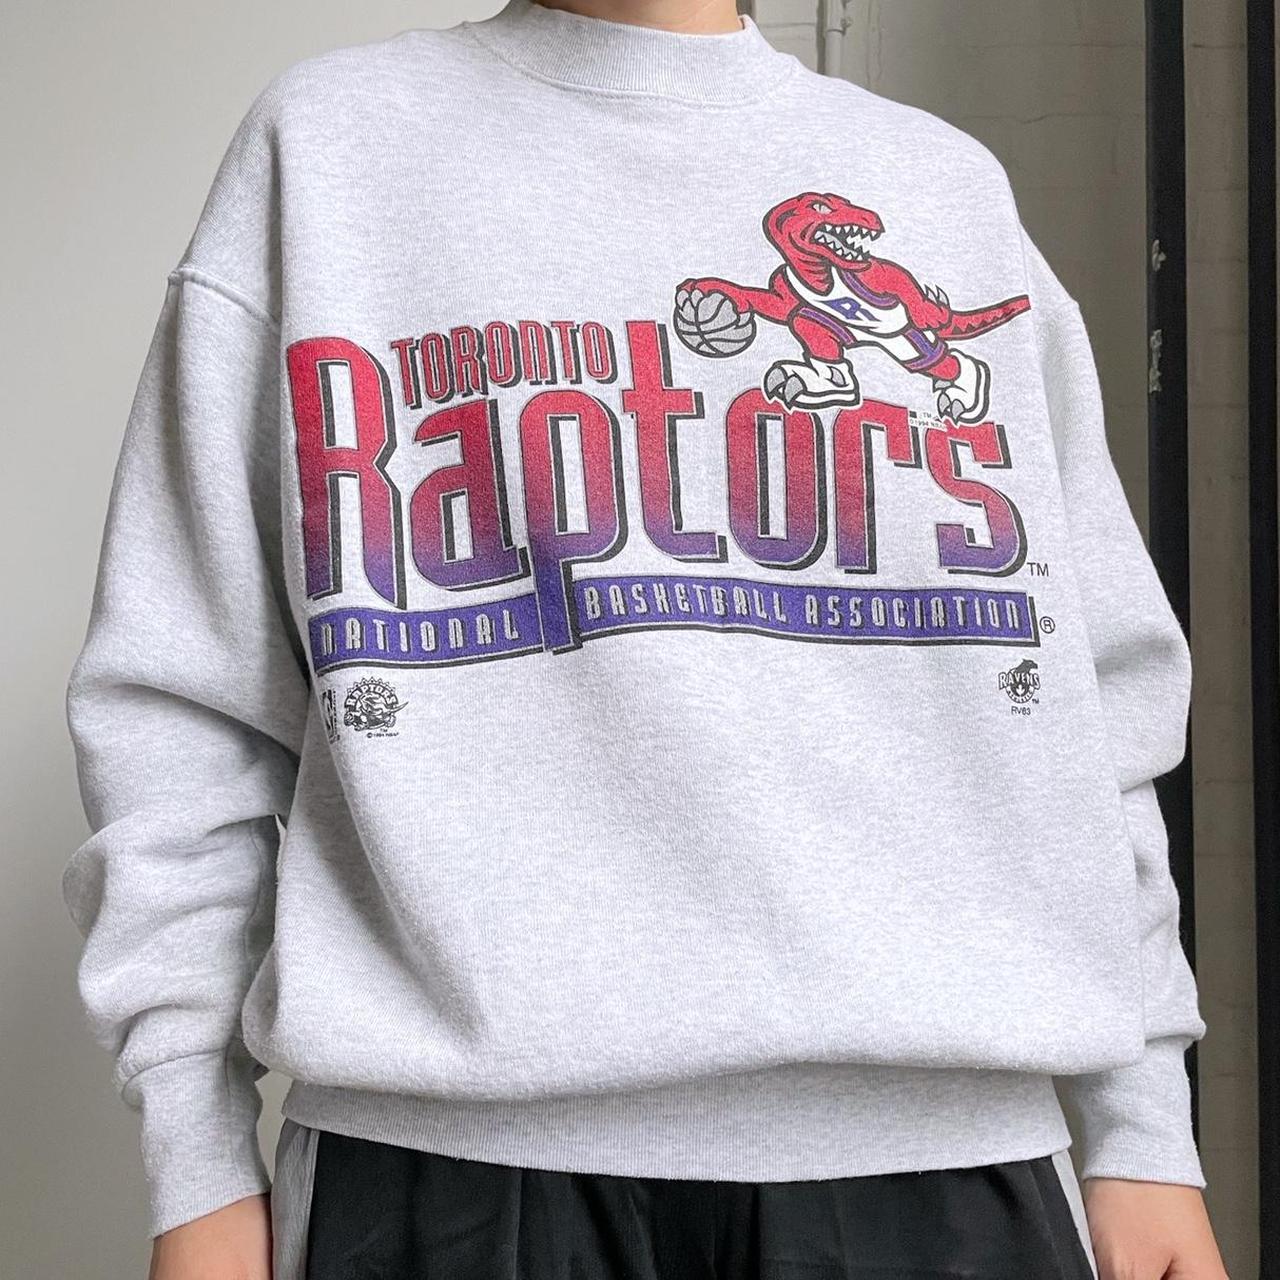 vintage raptors sweater